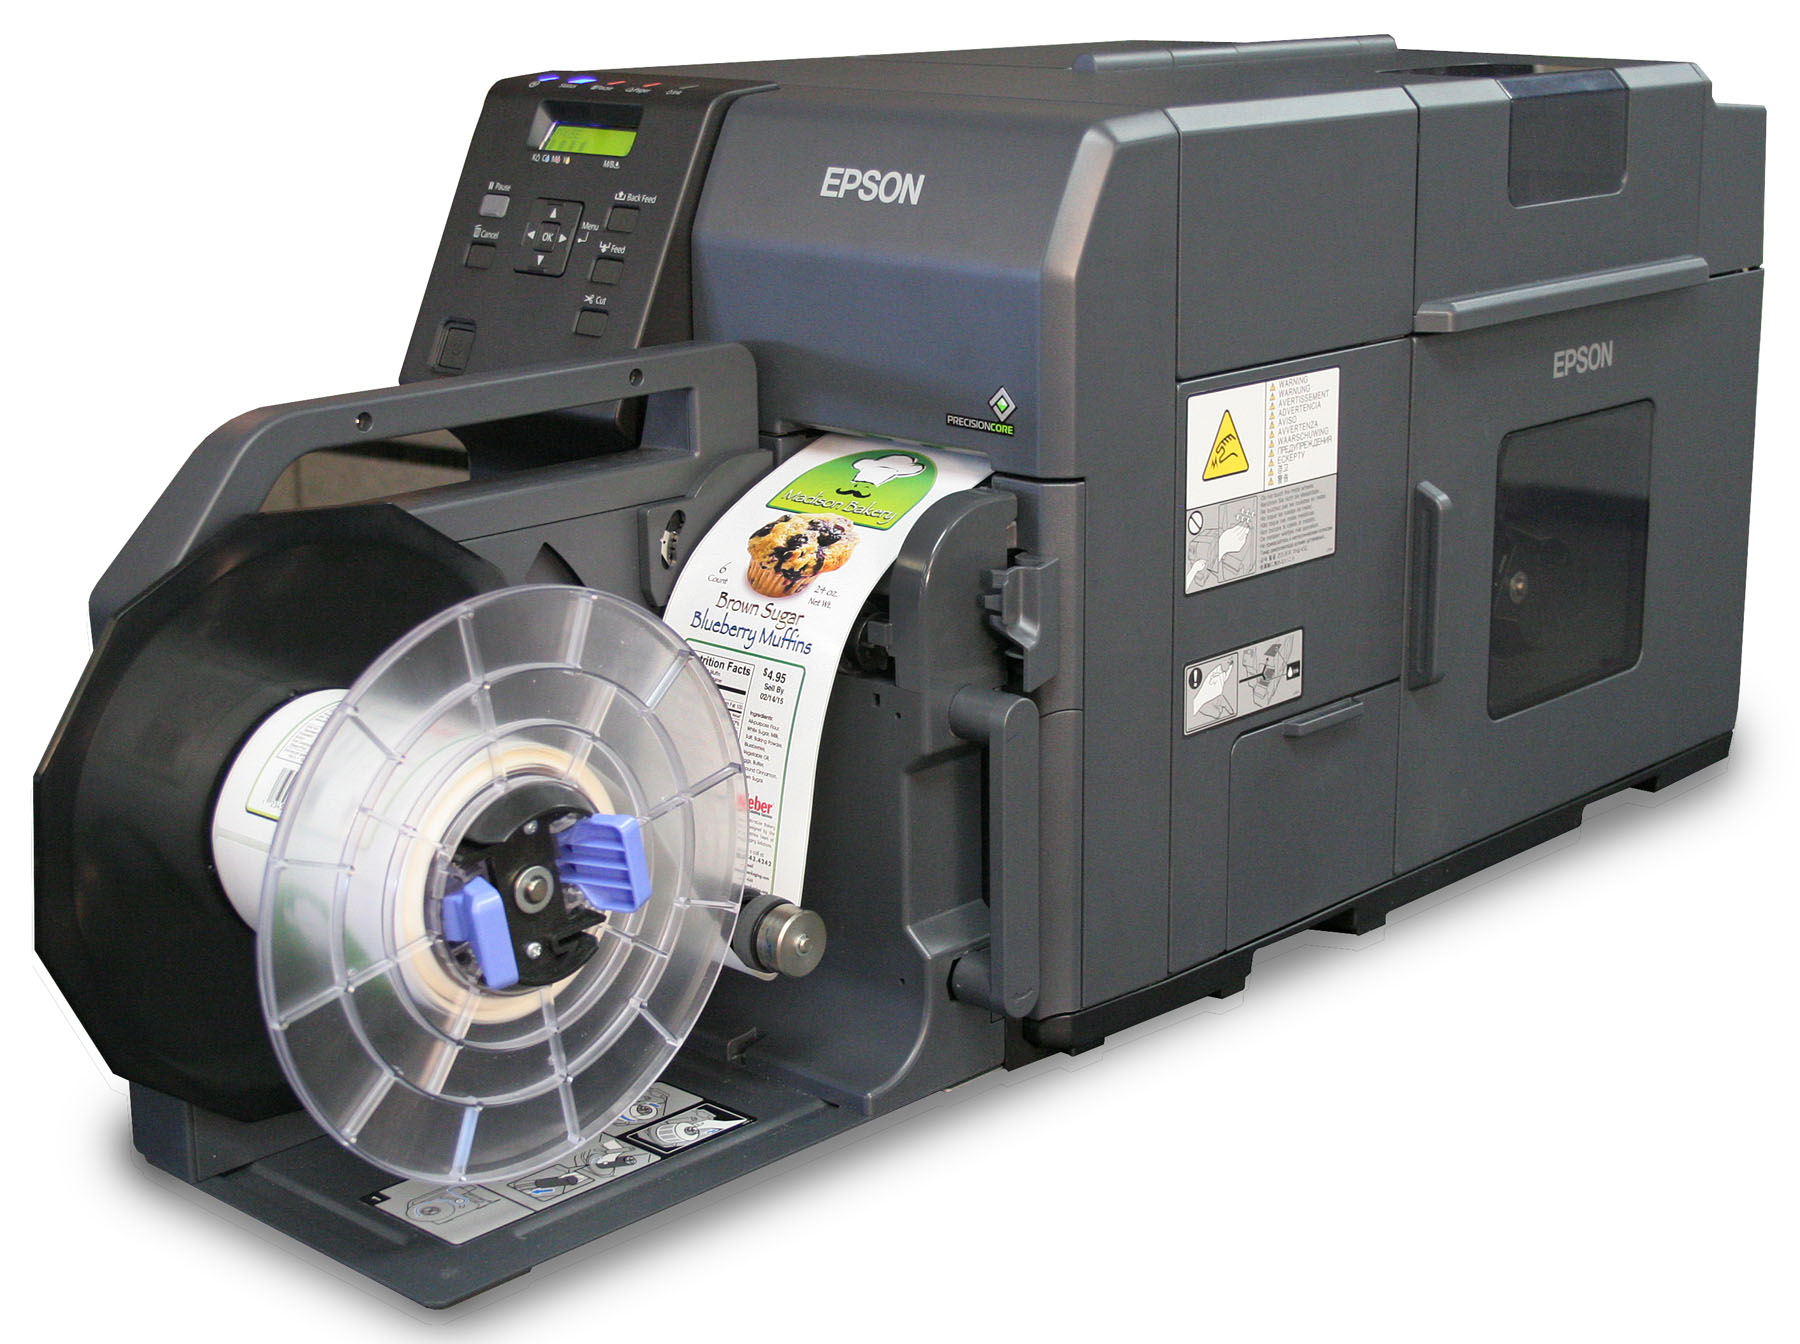 Epson C7500 label printer